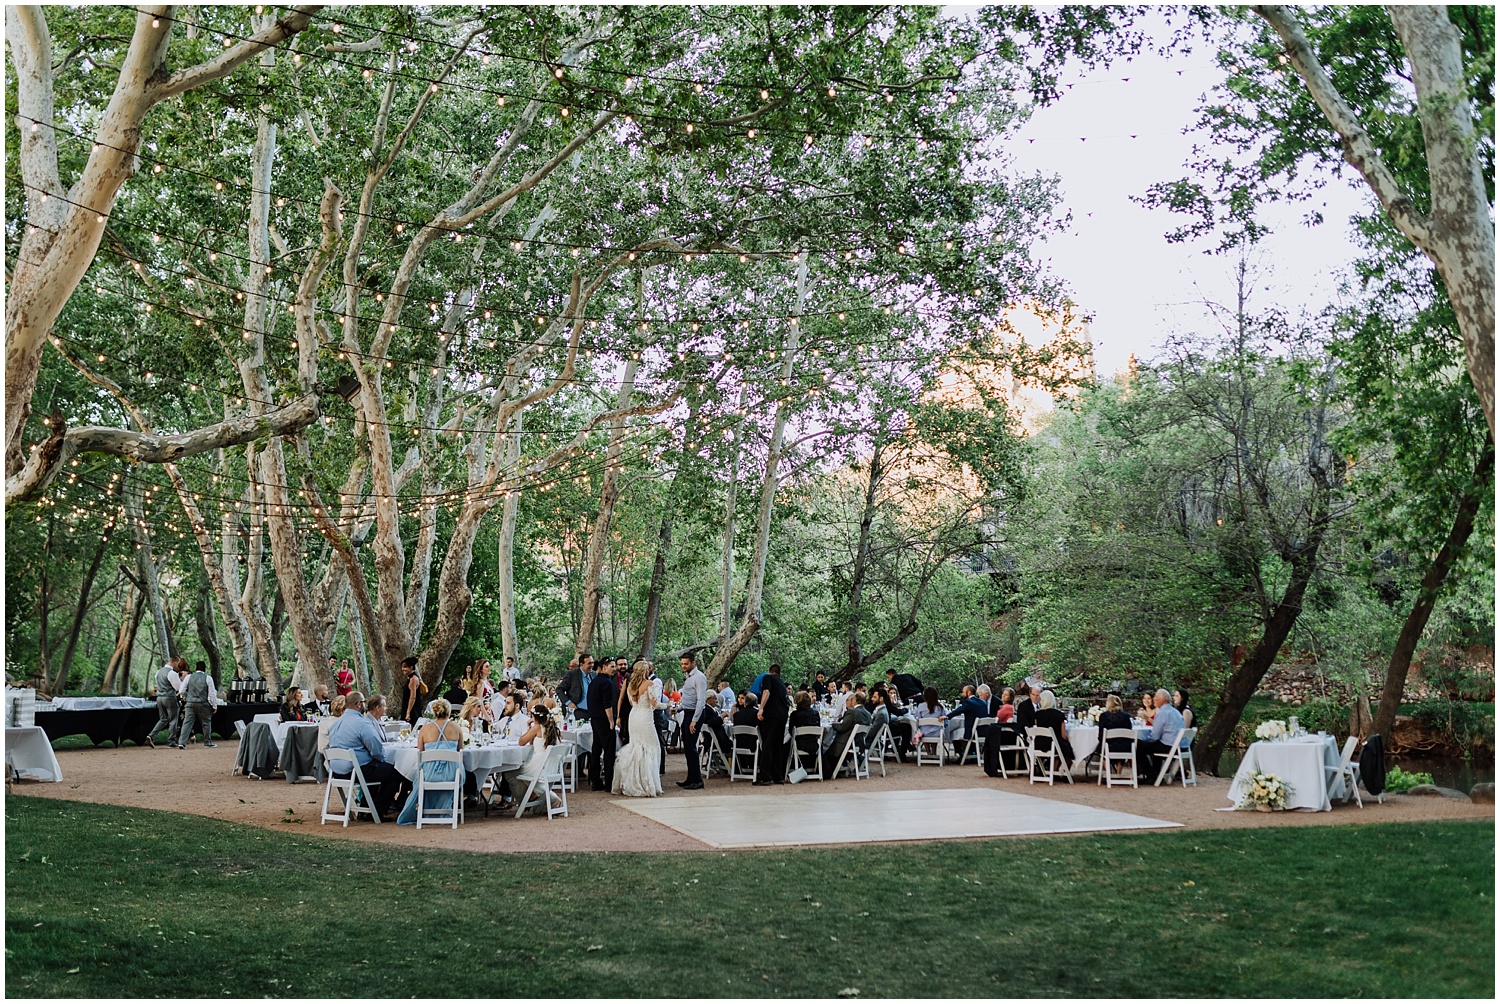 Outdoor Wedding Reception at Oak Creek Canyon in Sedona, Arizona